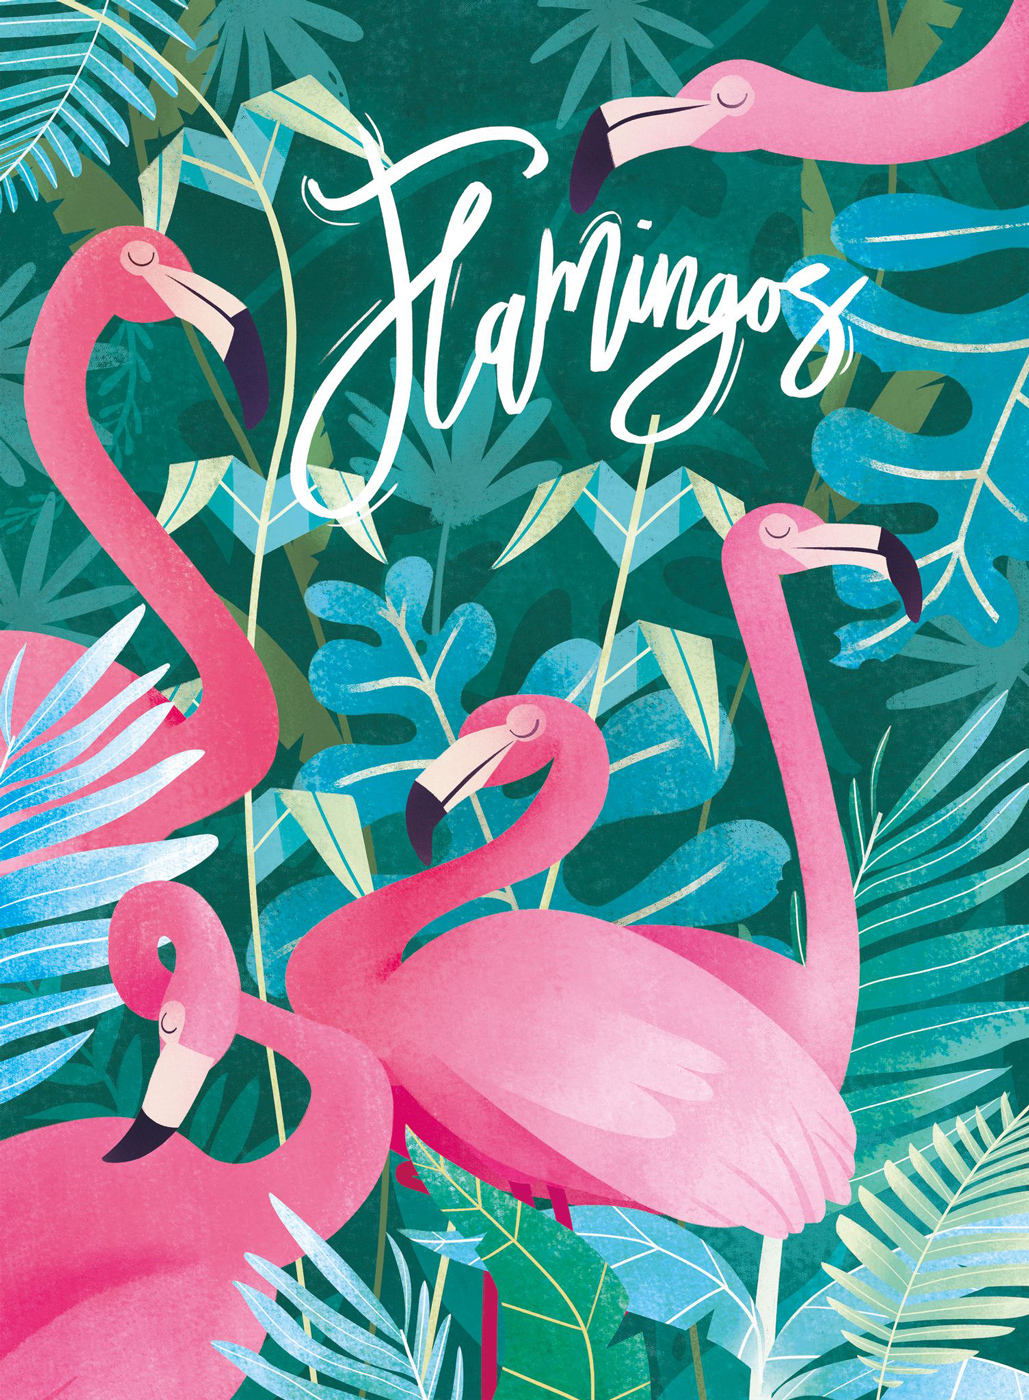 Fantastic Animal - Flamingos Birds Jigsaw Puzzle